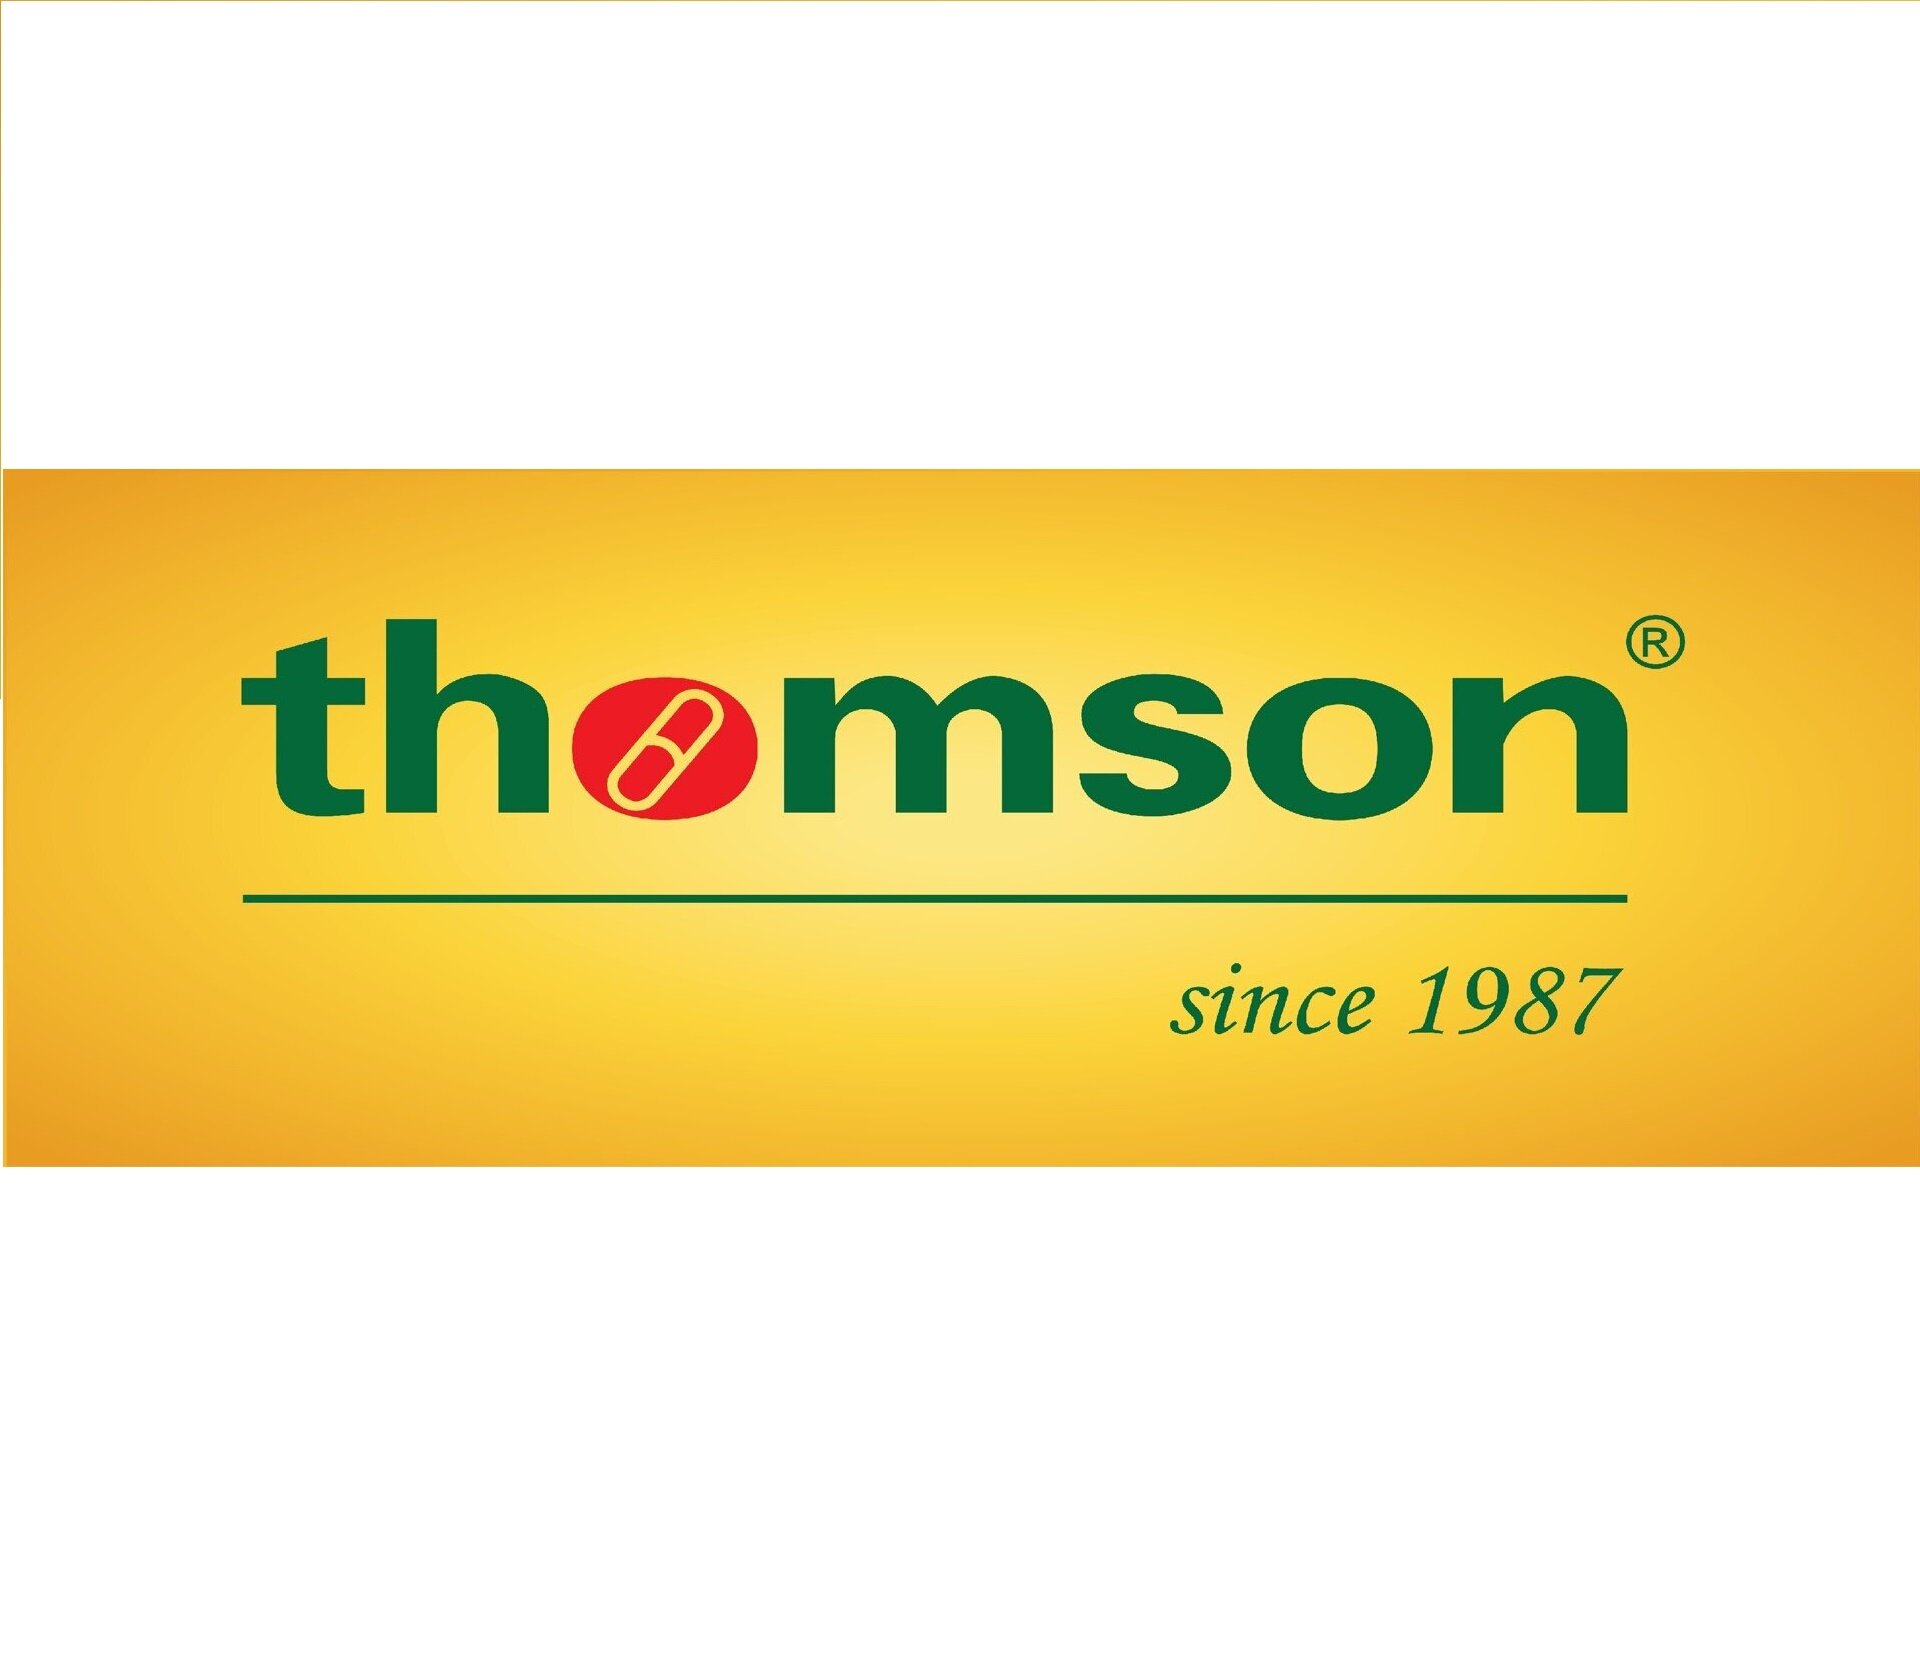 Thomson Health Pte. Ltd. company logo